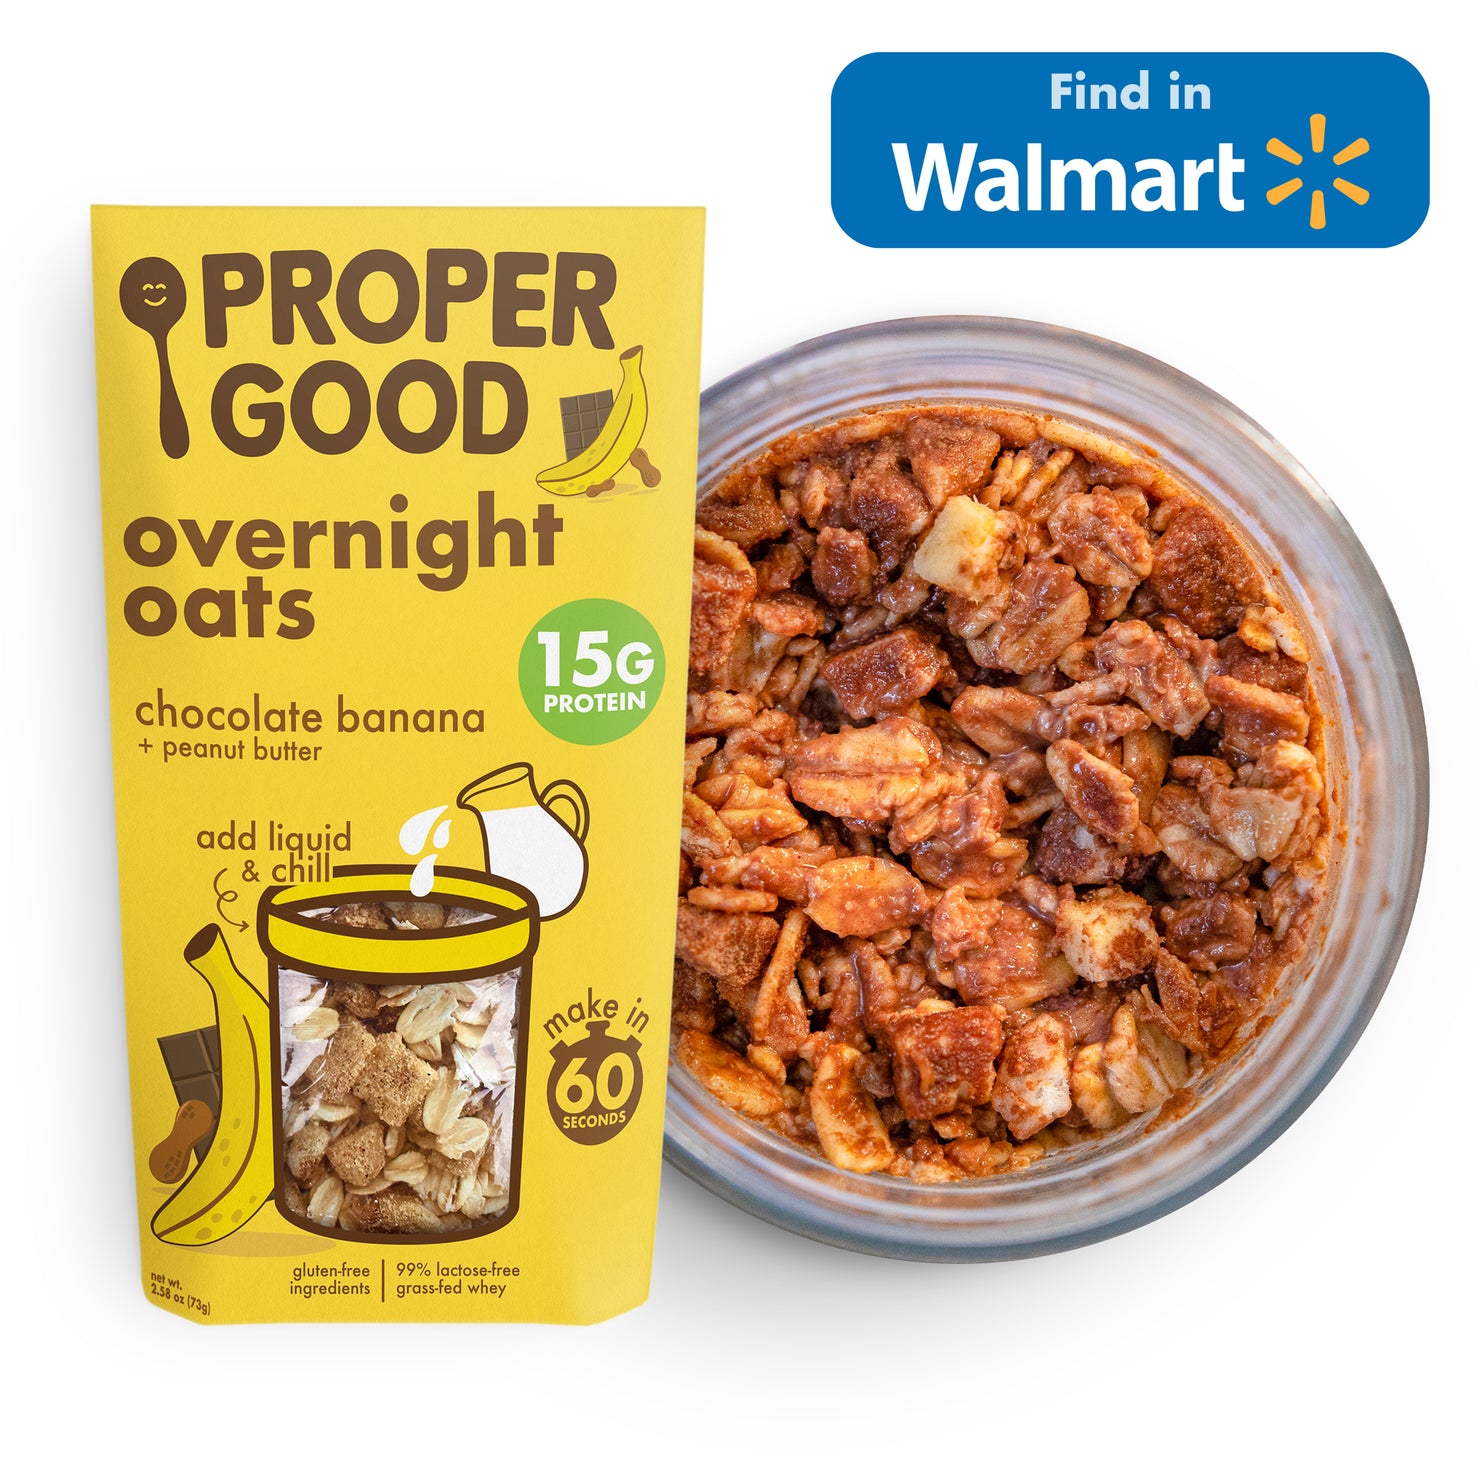 Chocolate Peanut Butter & Banana Overnight Oats 15g Protein - Find in Walmart - Eat Proper Good